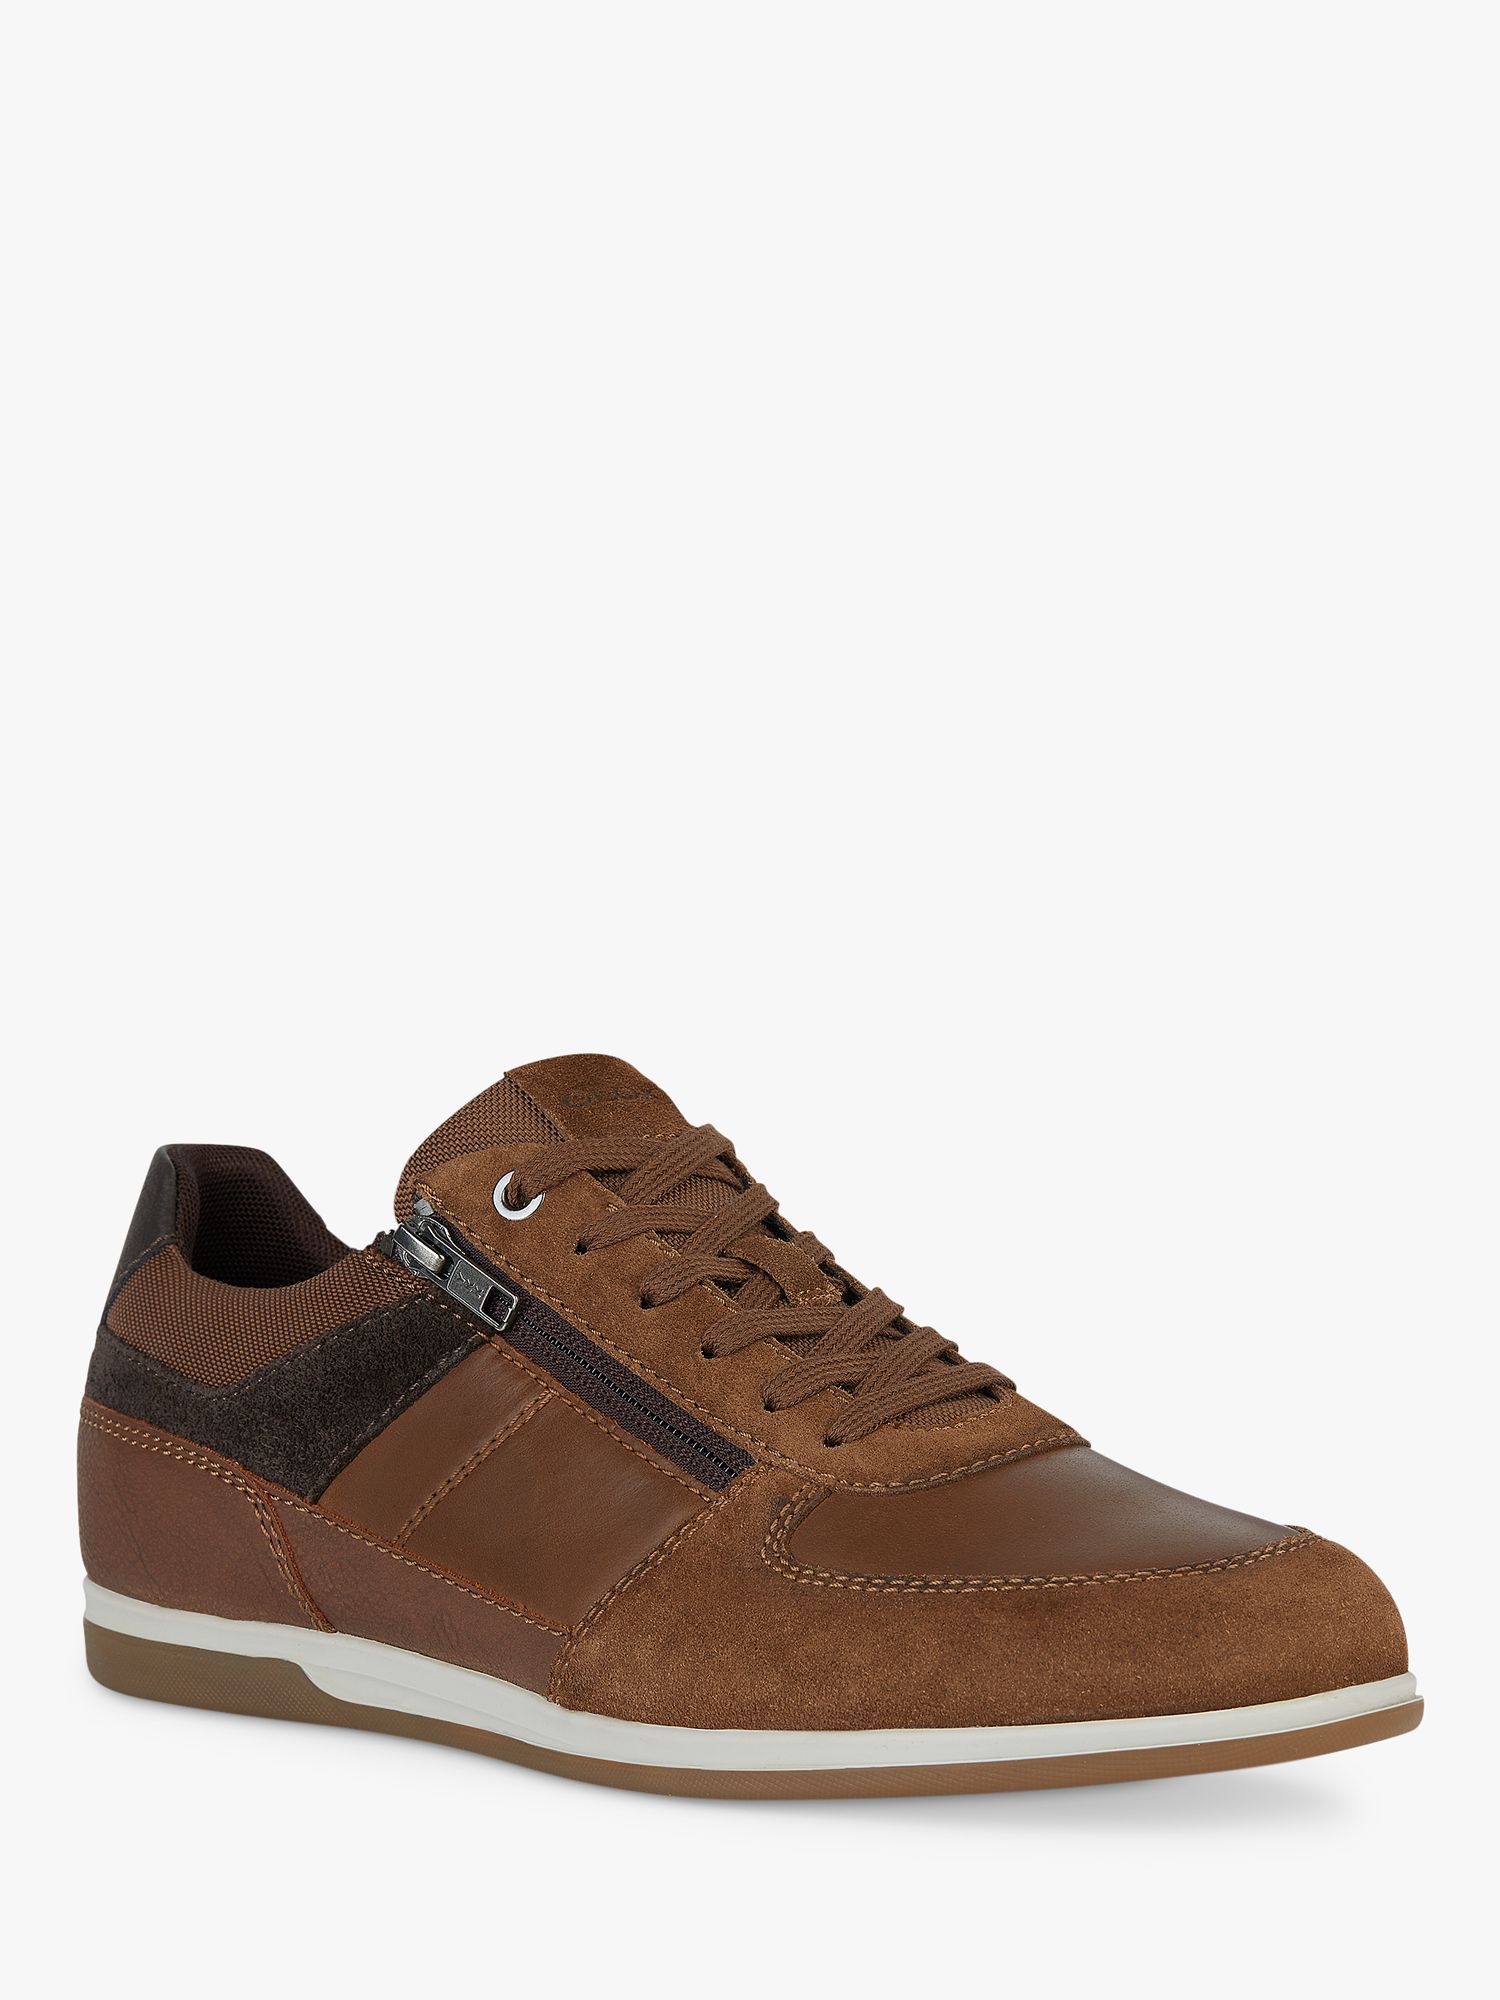 Geox Renan Low Cut Sneakers, Brown, EU39